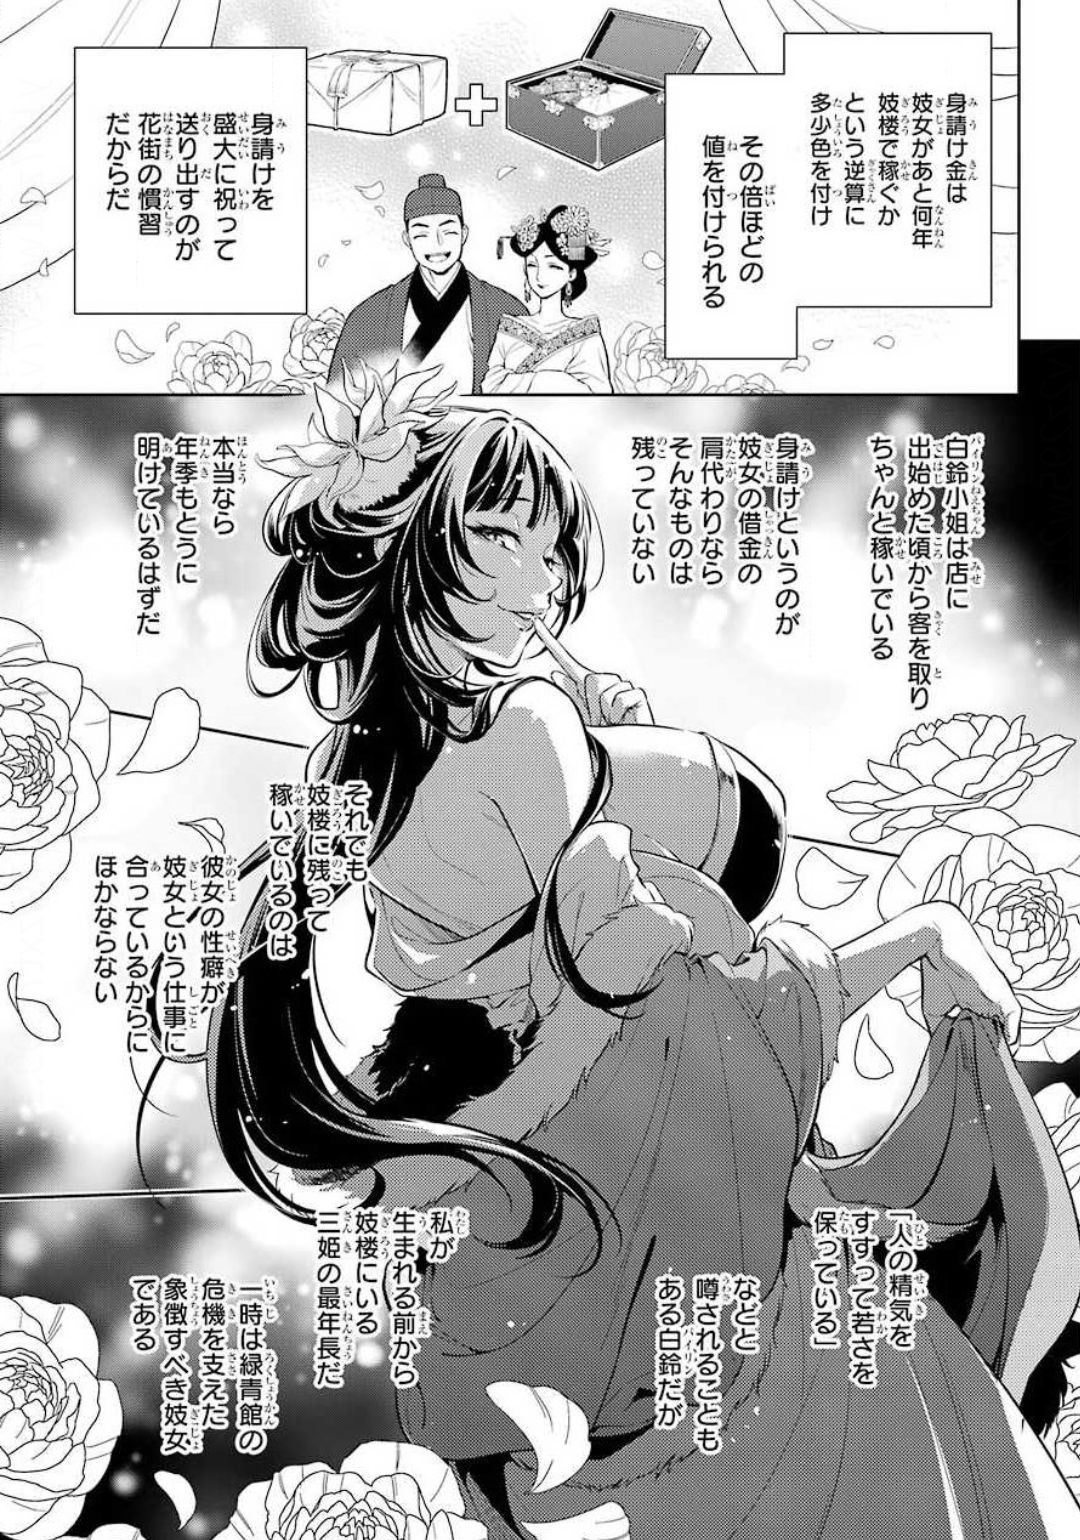 Kusuriya no Hitorigoto - Chapter 35.2 - Page 2